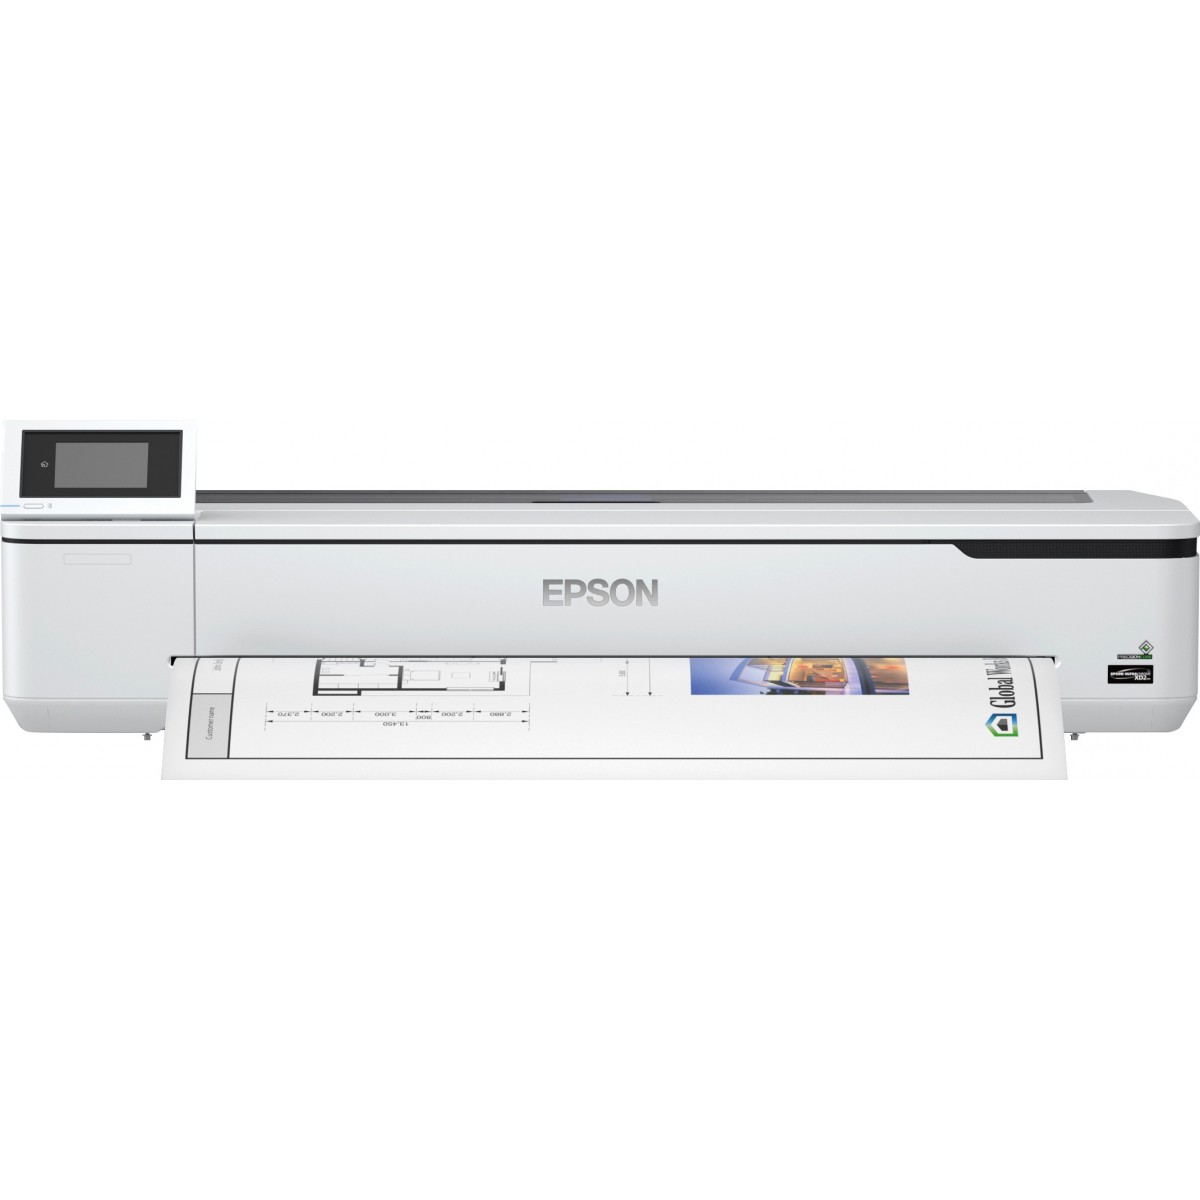 Epson SureColor SC-T5100N - 2400 x 1200 DPI - ESC/P-R,HP-GL/2,HP-RTL - Black - Cyan - Magenta - Yellow - PrecisionCore - A0 (841